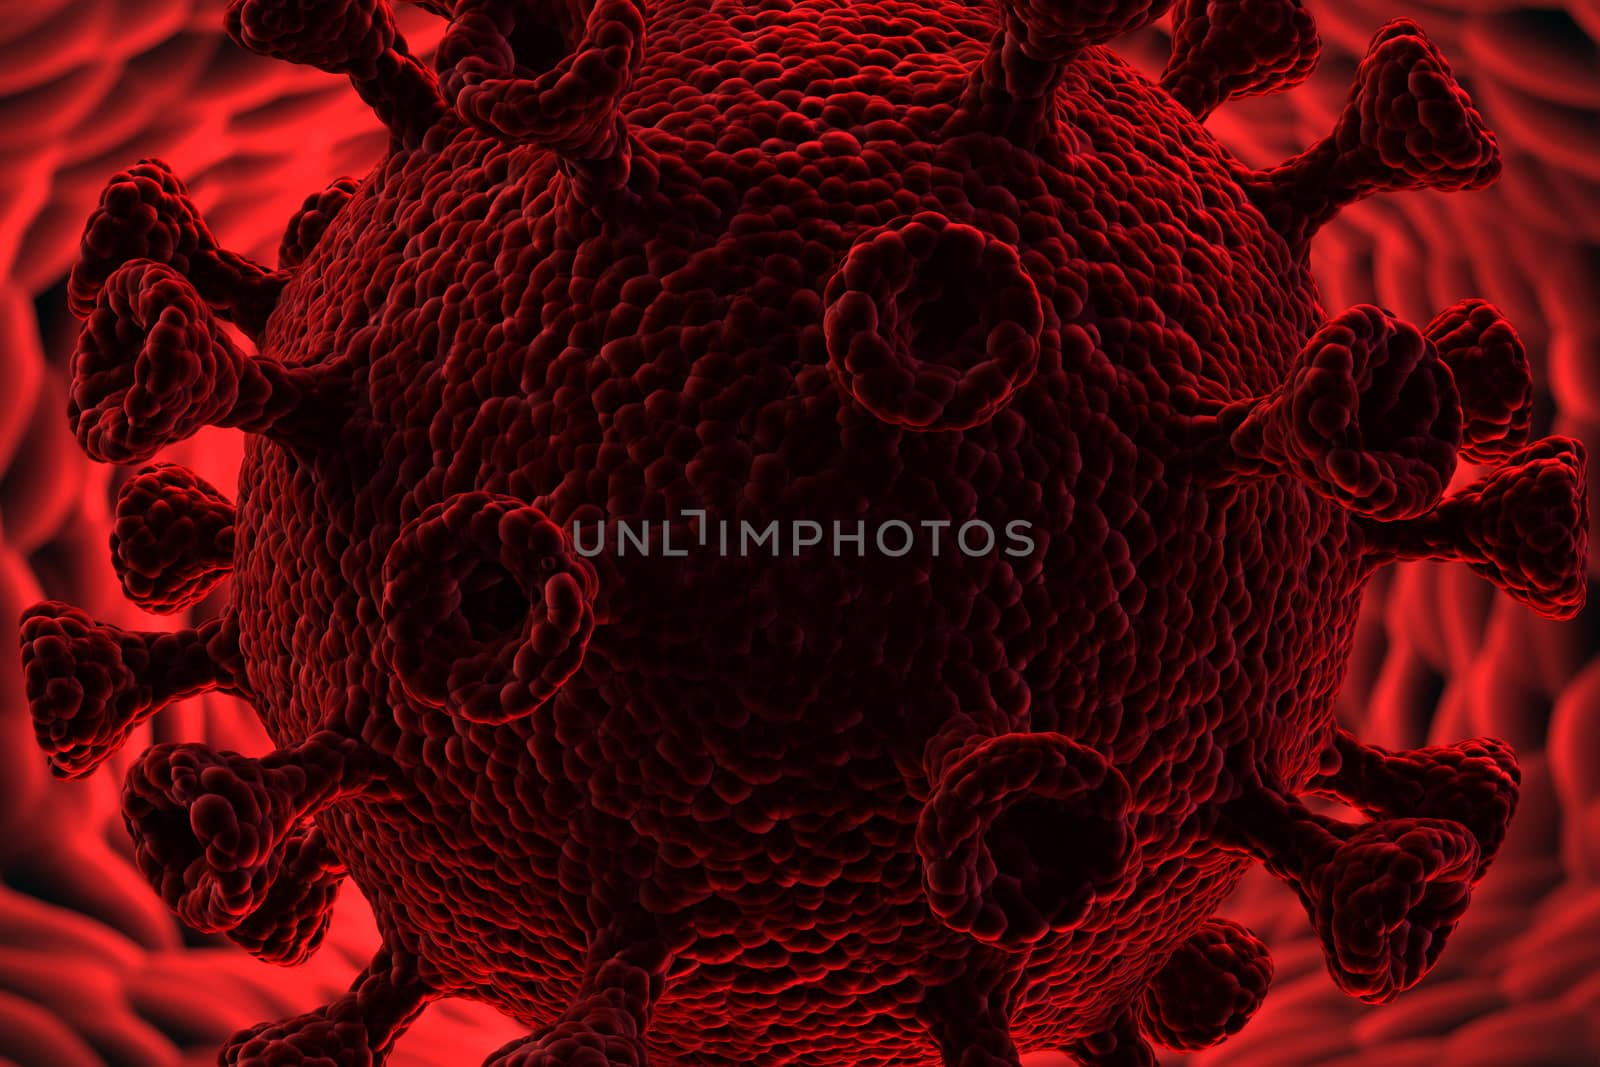 Close - up image of a coronavirus cell. 3D illustration